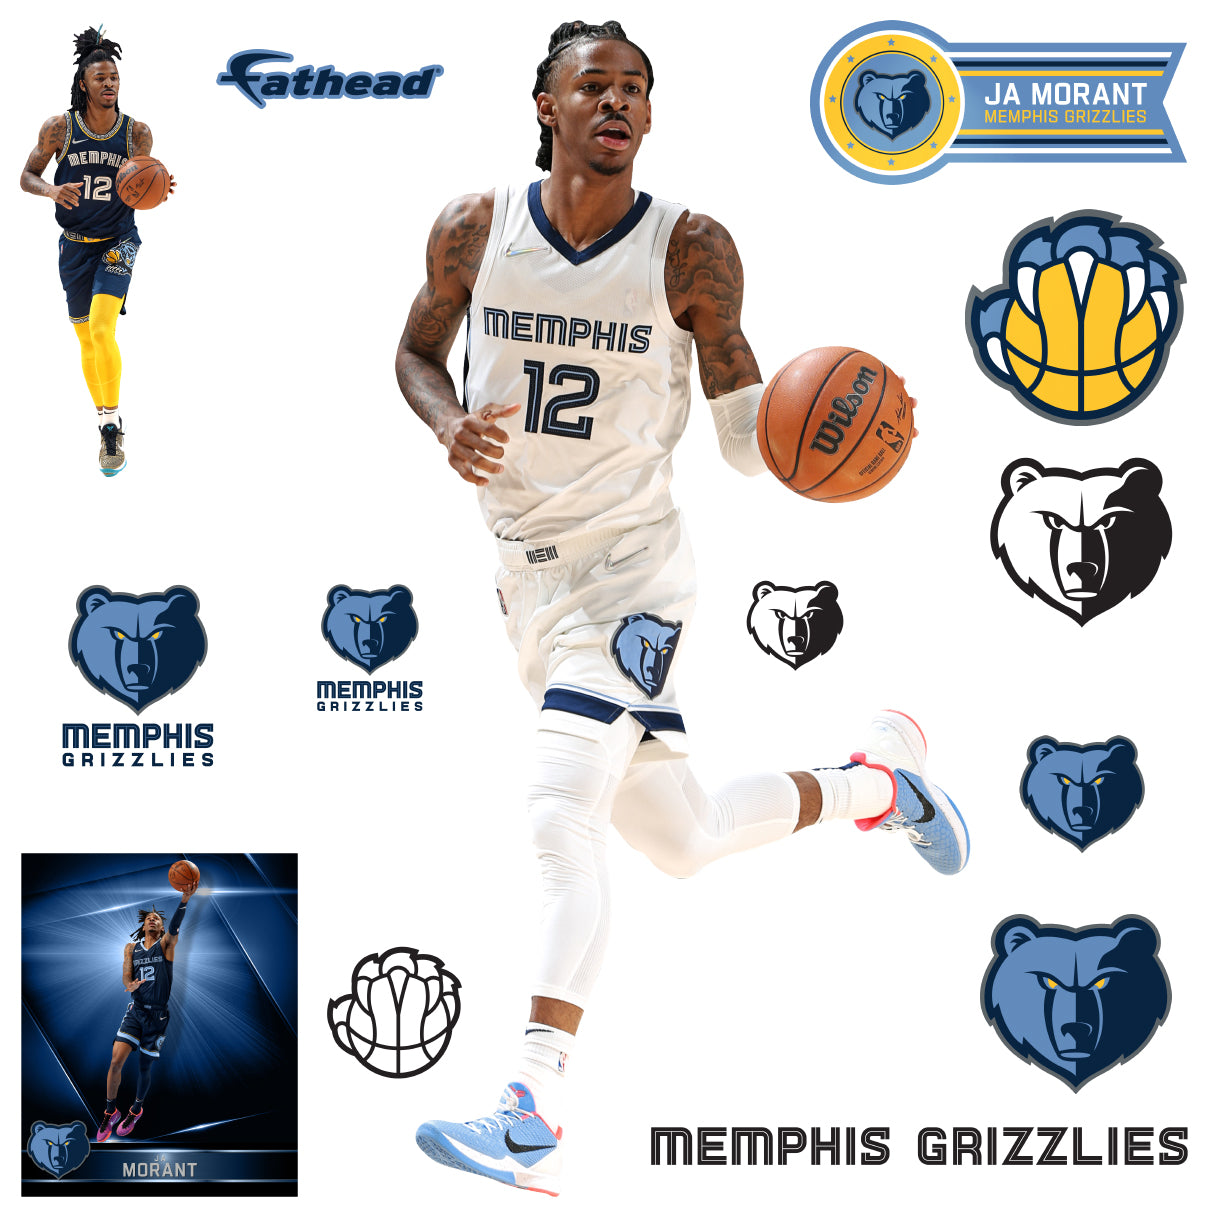 Ja+Morant+Memphis+Grizzlies+NBA+Jersey+Size+L+Printed+logos+and+